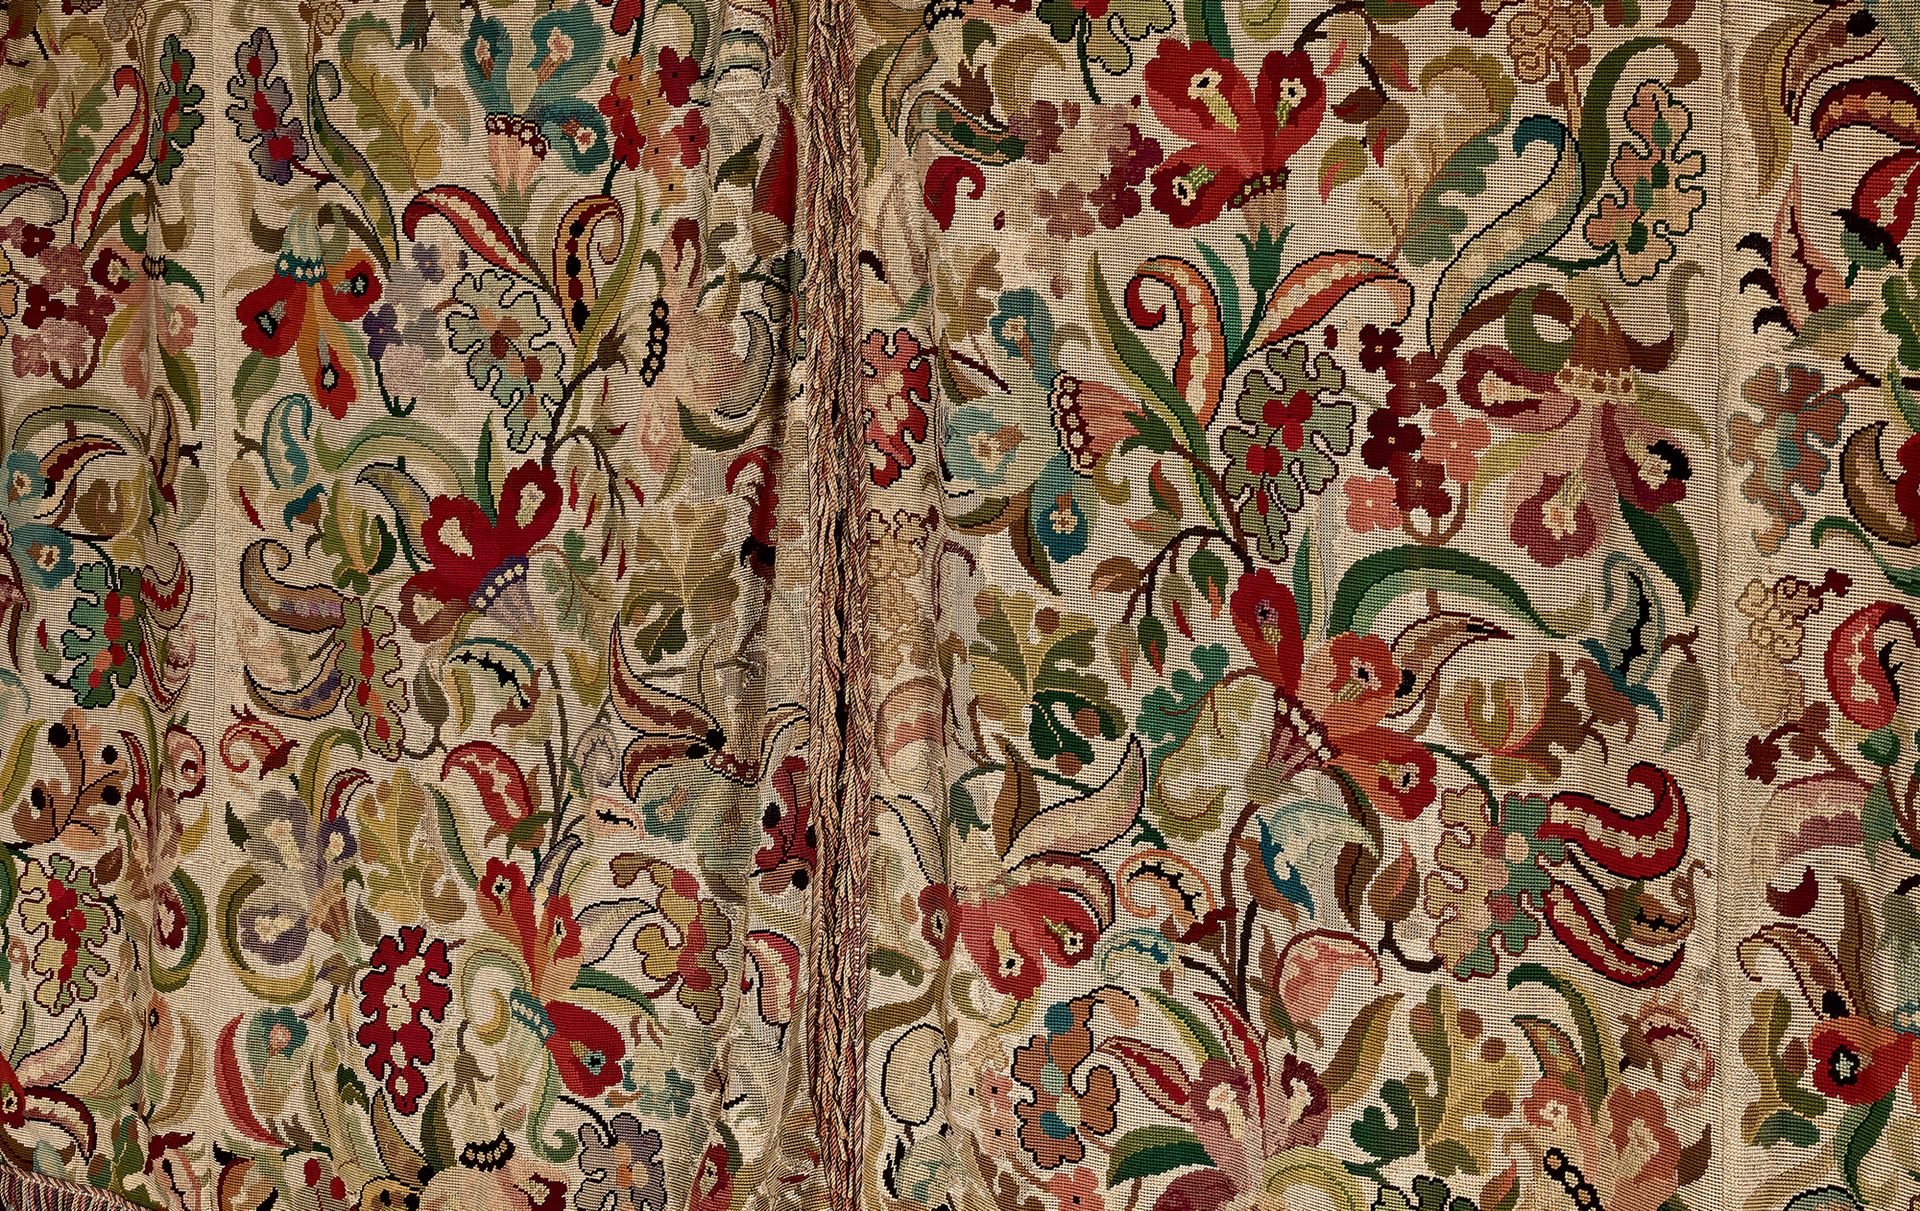 Null Par de cortinas con decoración estilo Reina Ana, gros point sobre
lienzo de&hellip;